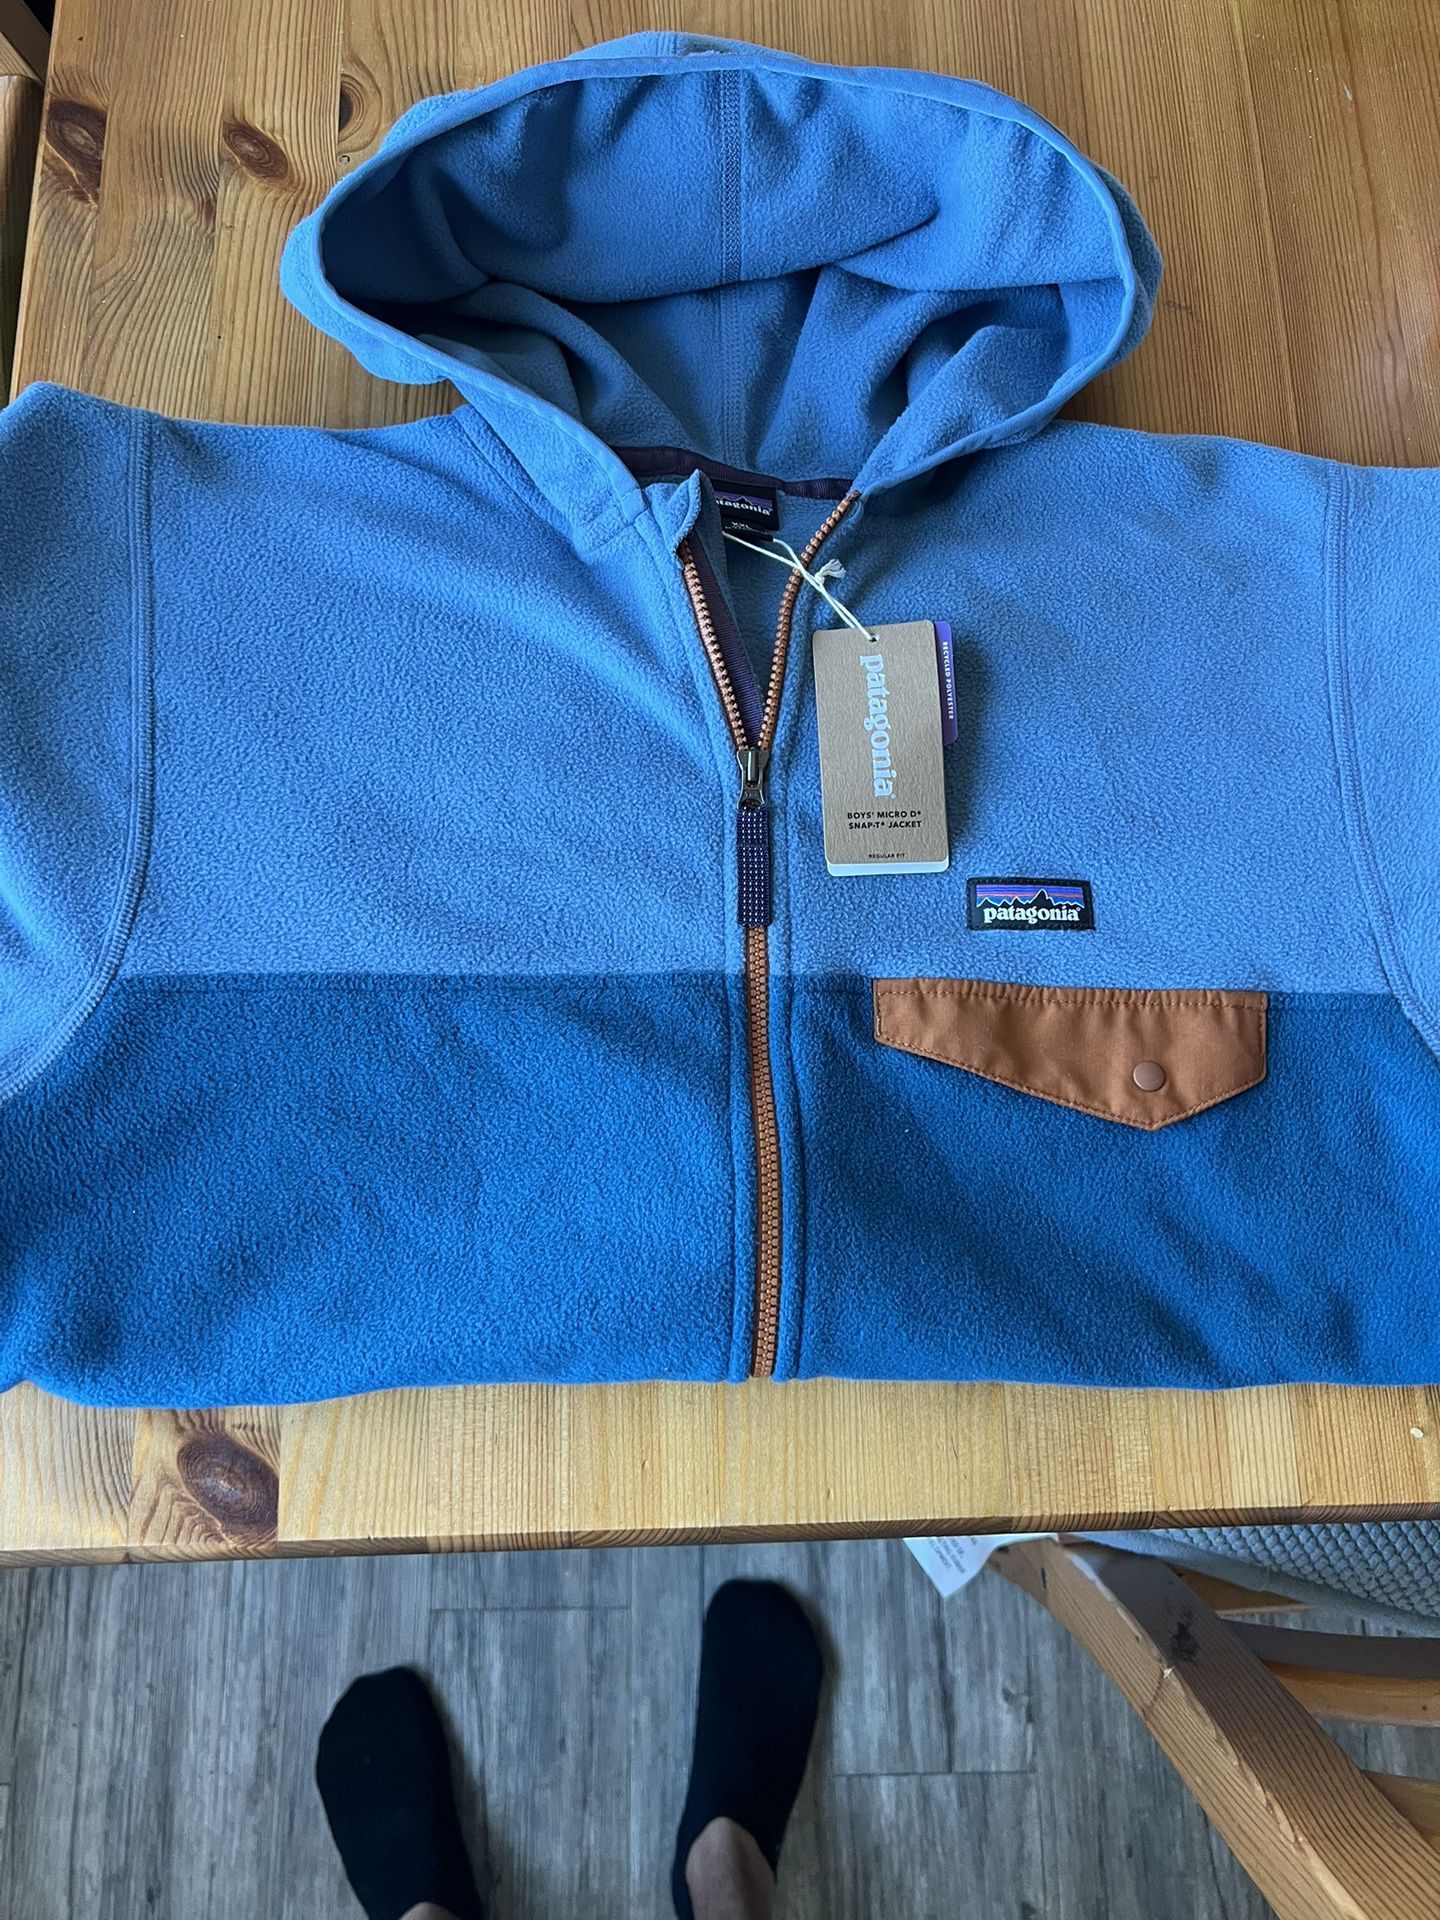 Brand New Blue Patagonia Fleece Jacket